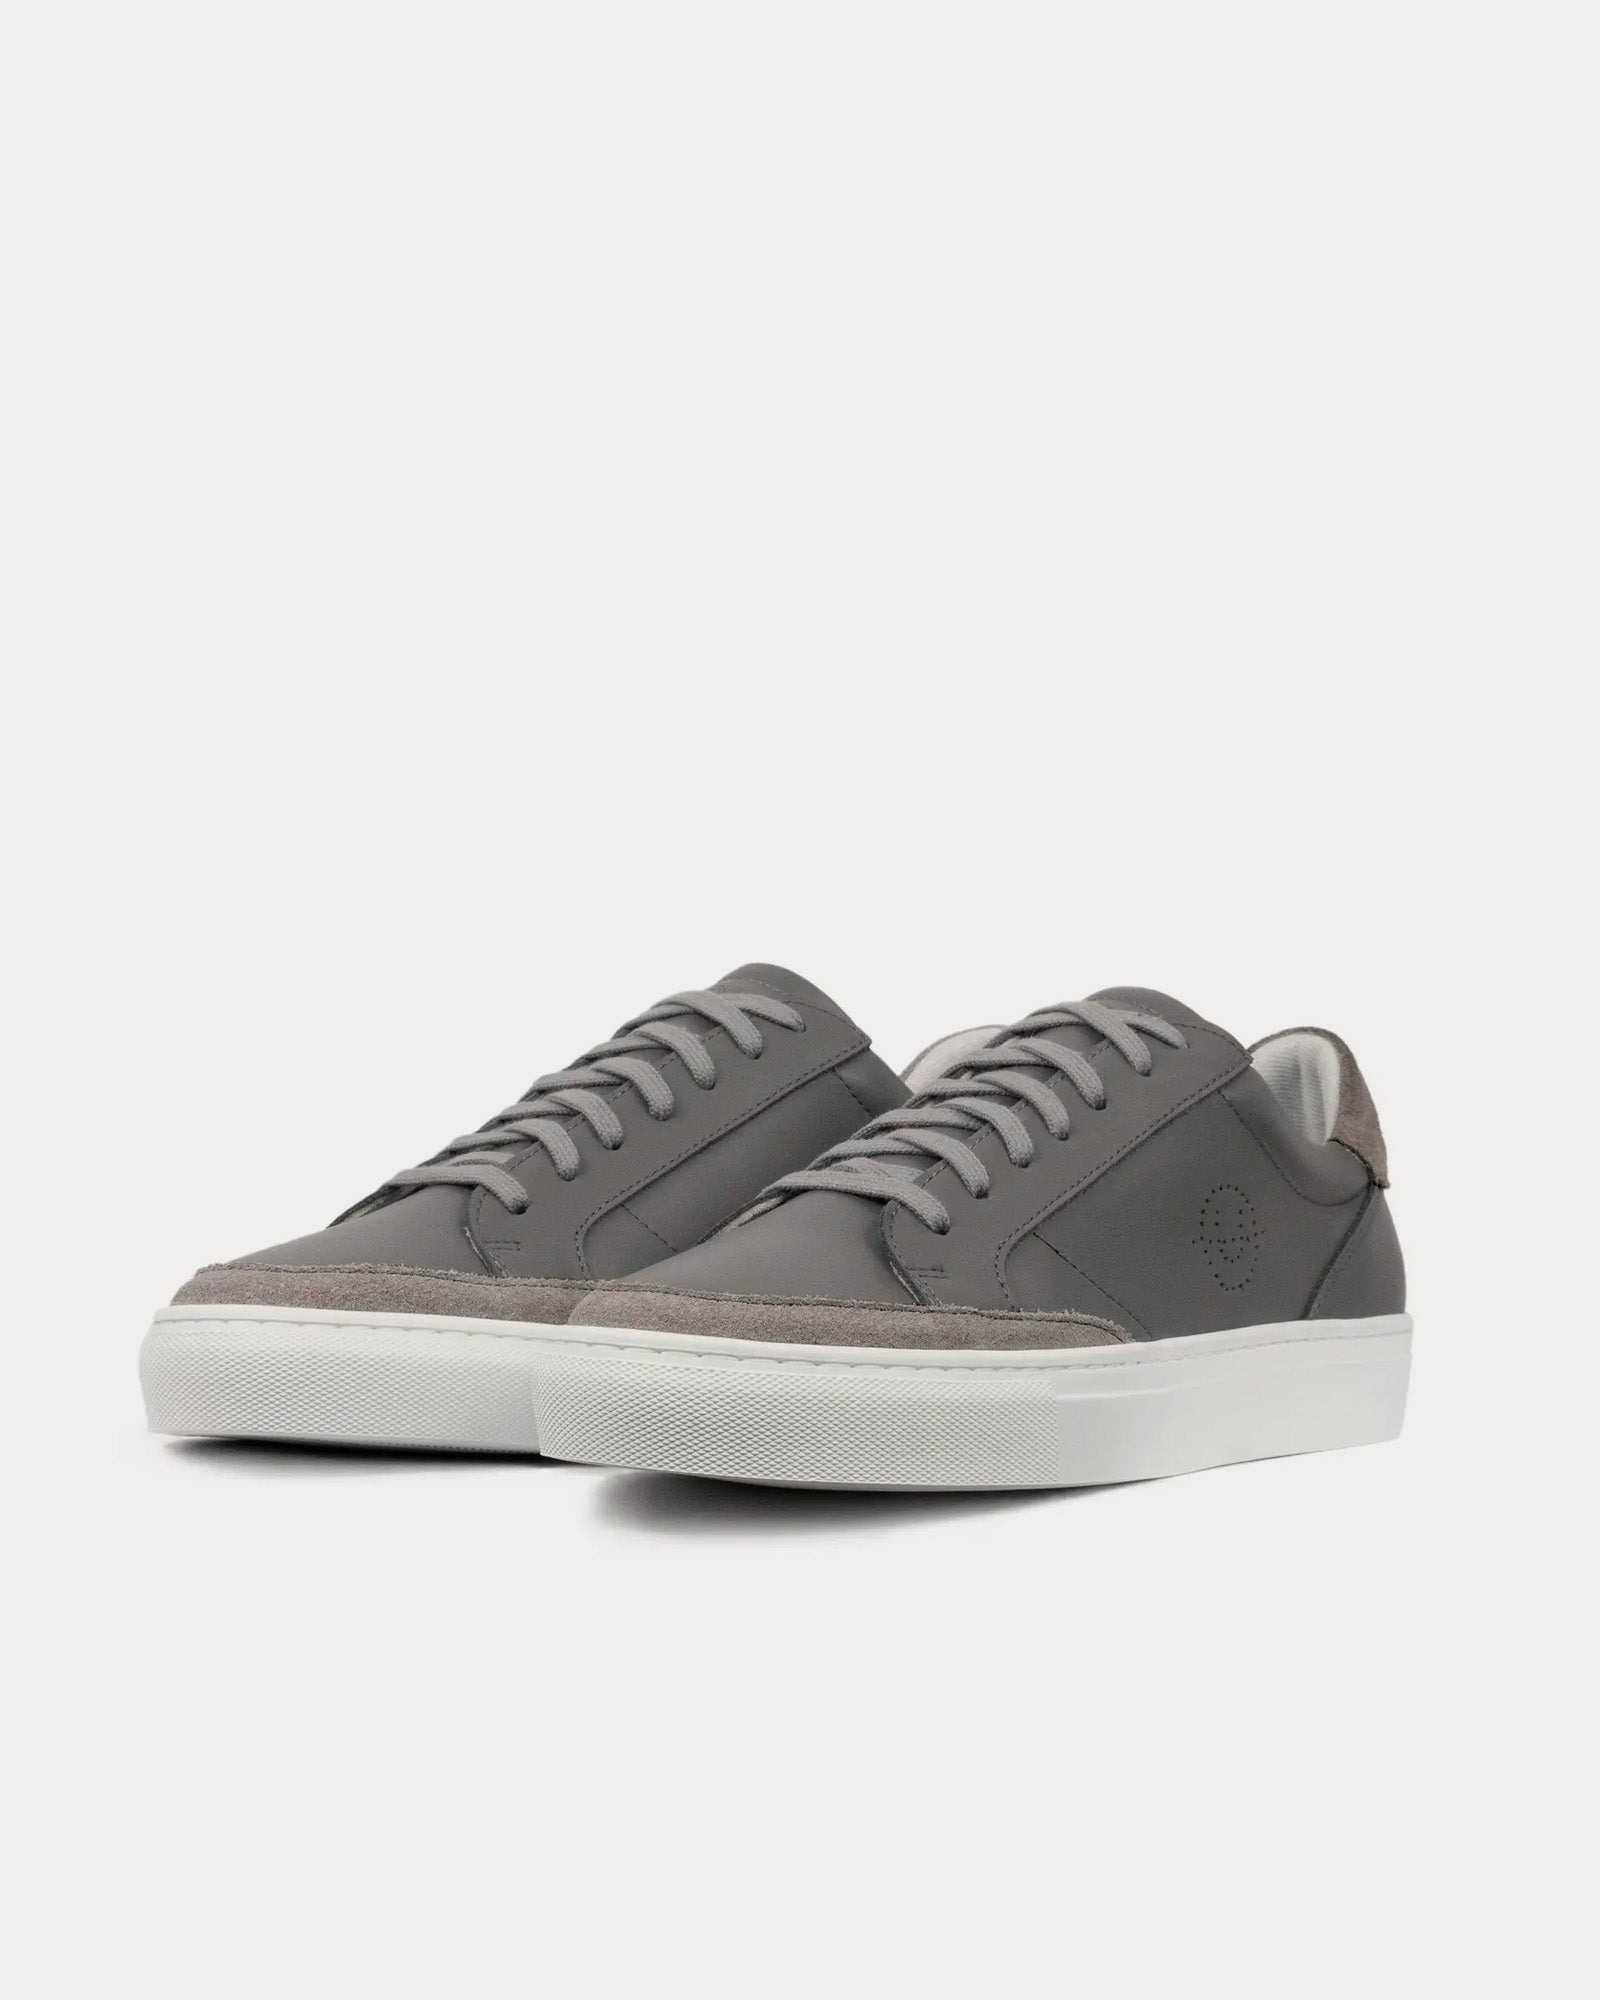 Unseen Footwear - Helier Leather & Suede Grey / White Low Top Sneakers